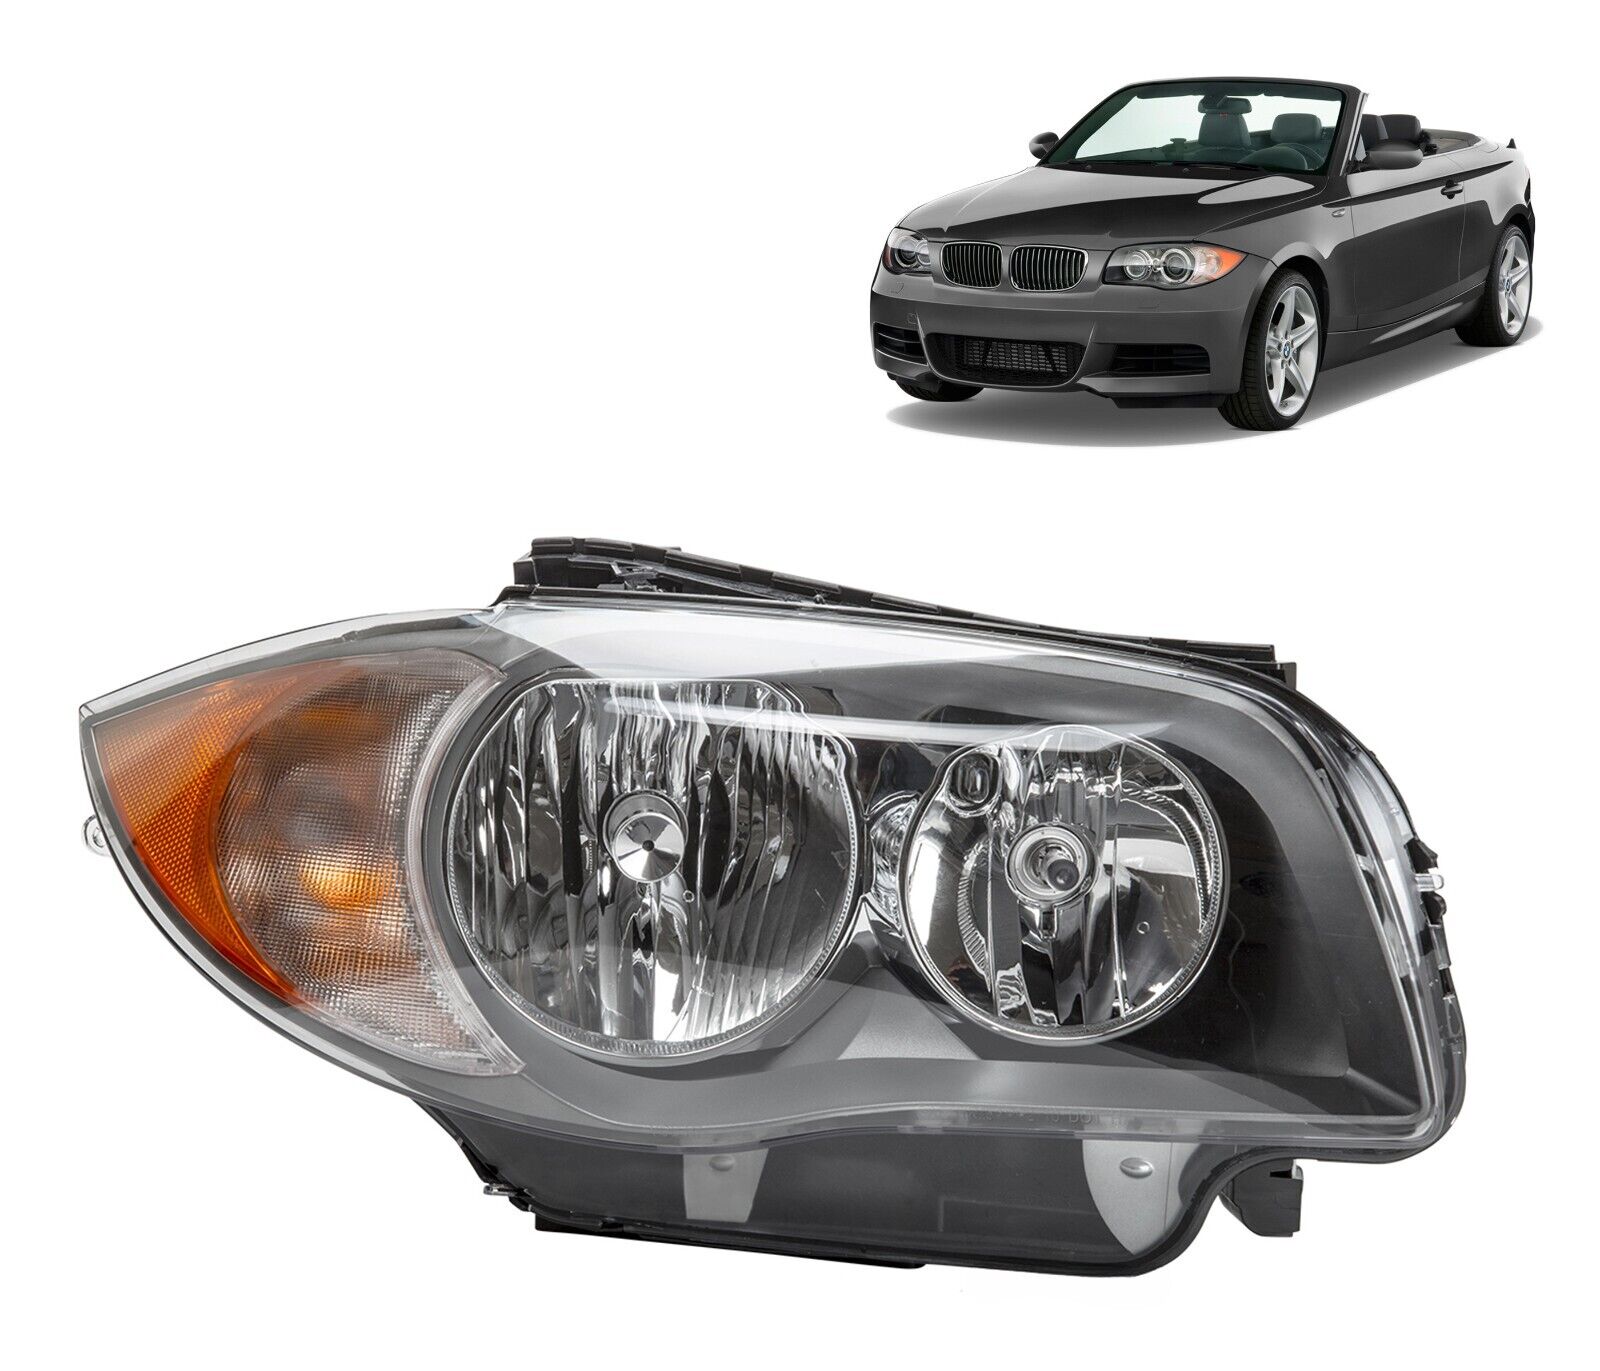 For BMW 128i, 135i 2008-2011 Headlight Assembly Right Side, BM2519118